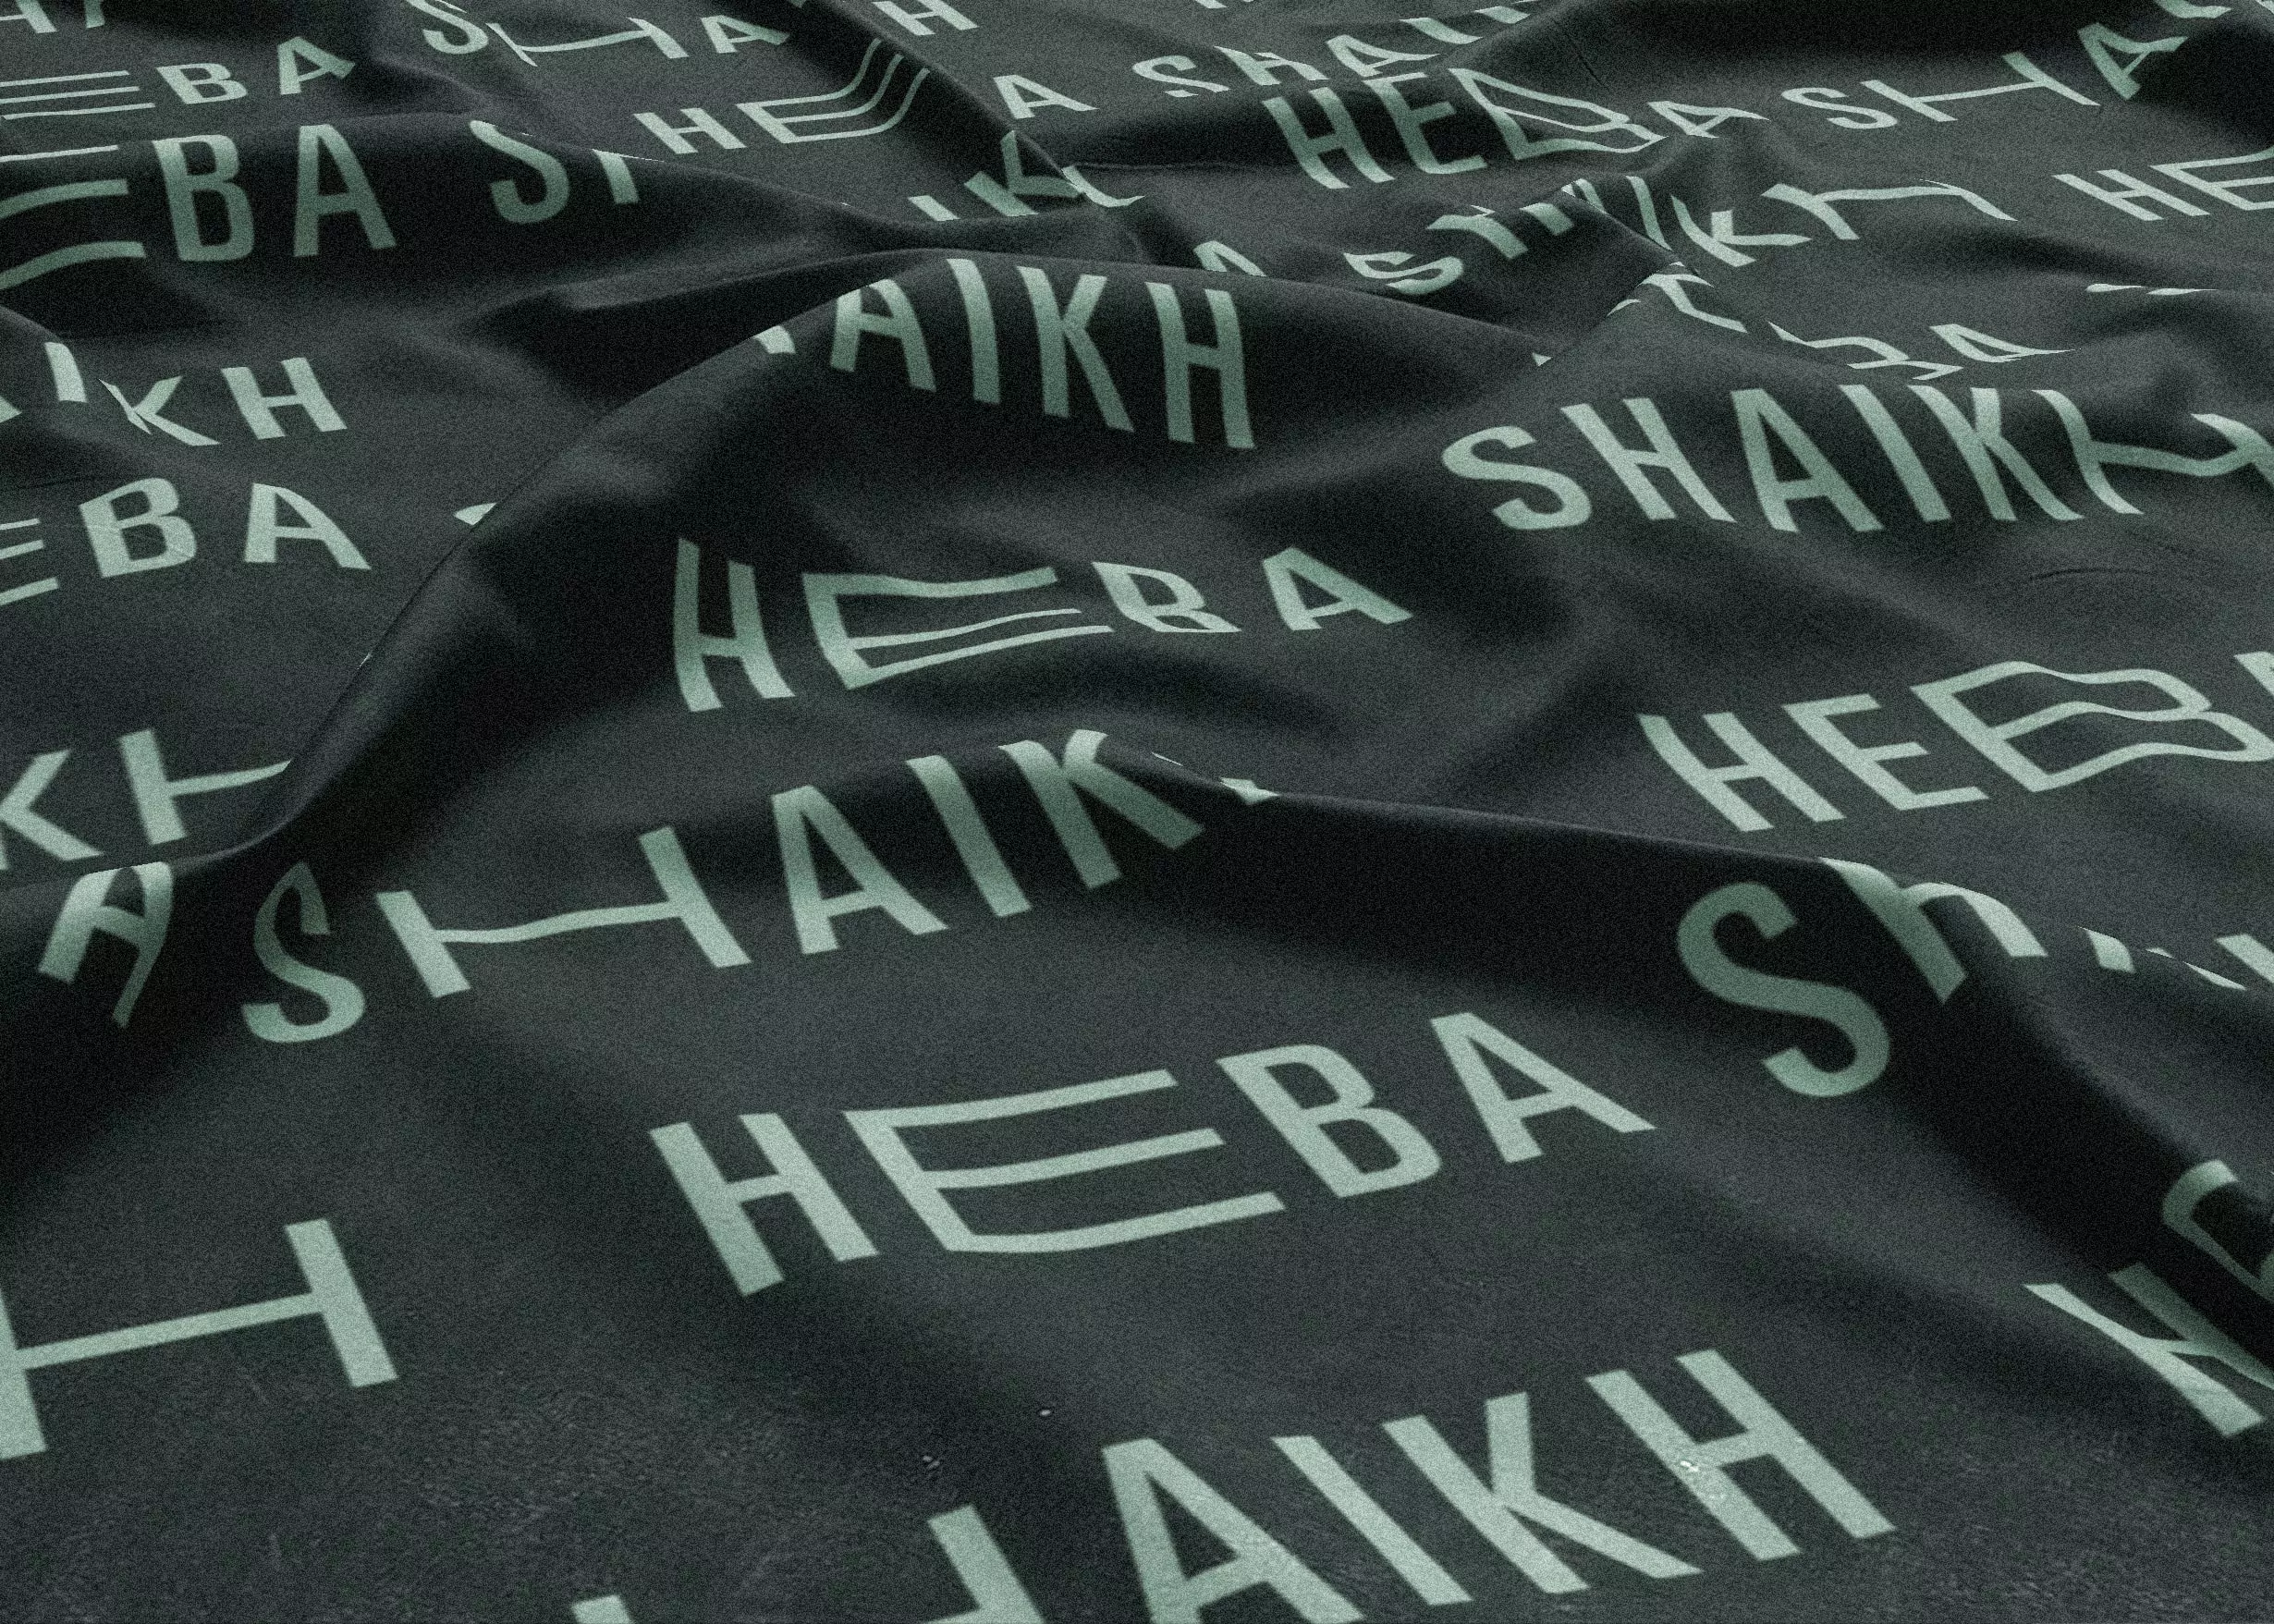 Heba Sheik Visual Identity - Flag Design